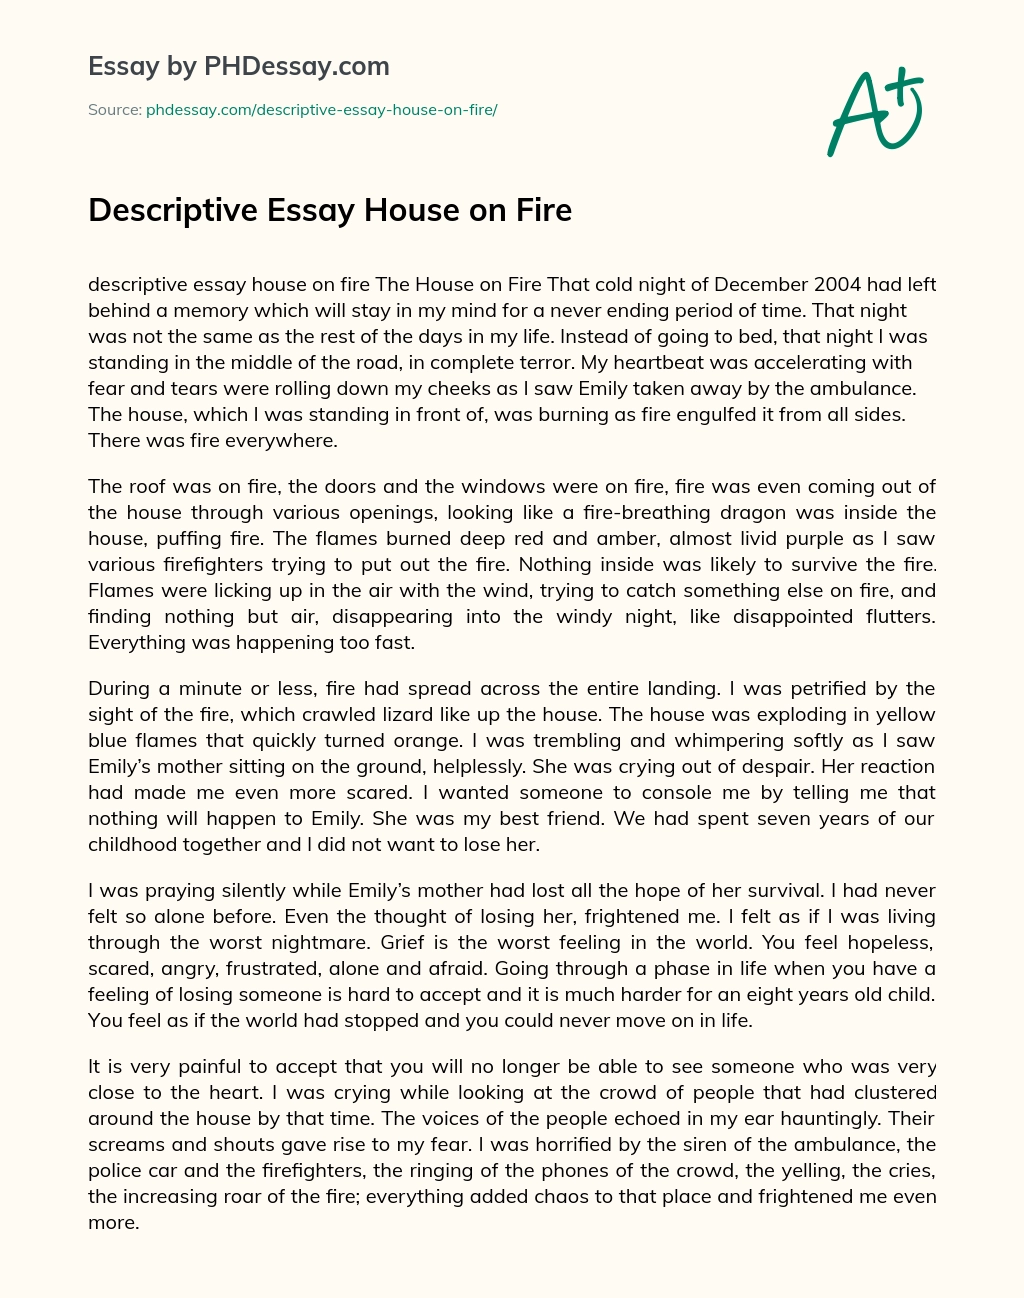 Descriptive Essay House on Fire essay